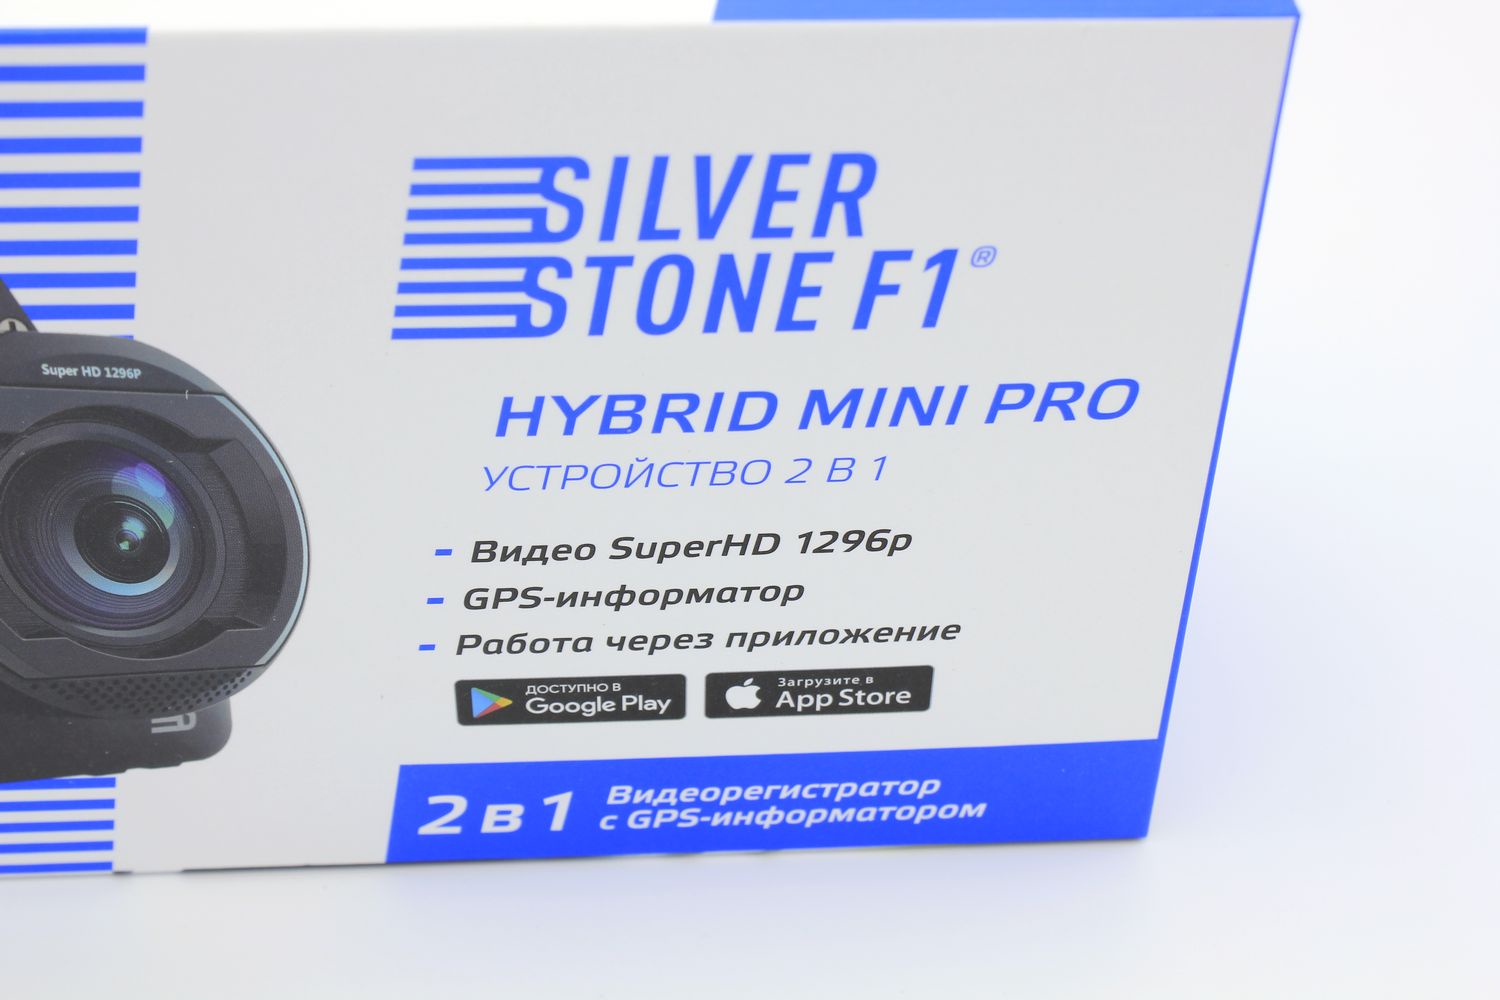 Silverstone hybrid mini pro. Видеорегистратор "Silverstone" Hybrid Mini, GPS-информатор. Упаковка Silverstone f1 Hybrid Mini Pro Wi-Fi. Видеорегистратор Silverstone f1 Hybrid Mini Pro, GPS.